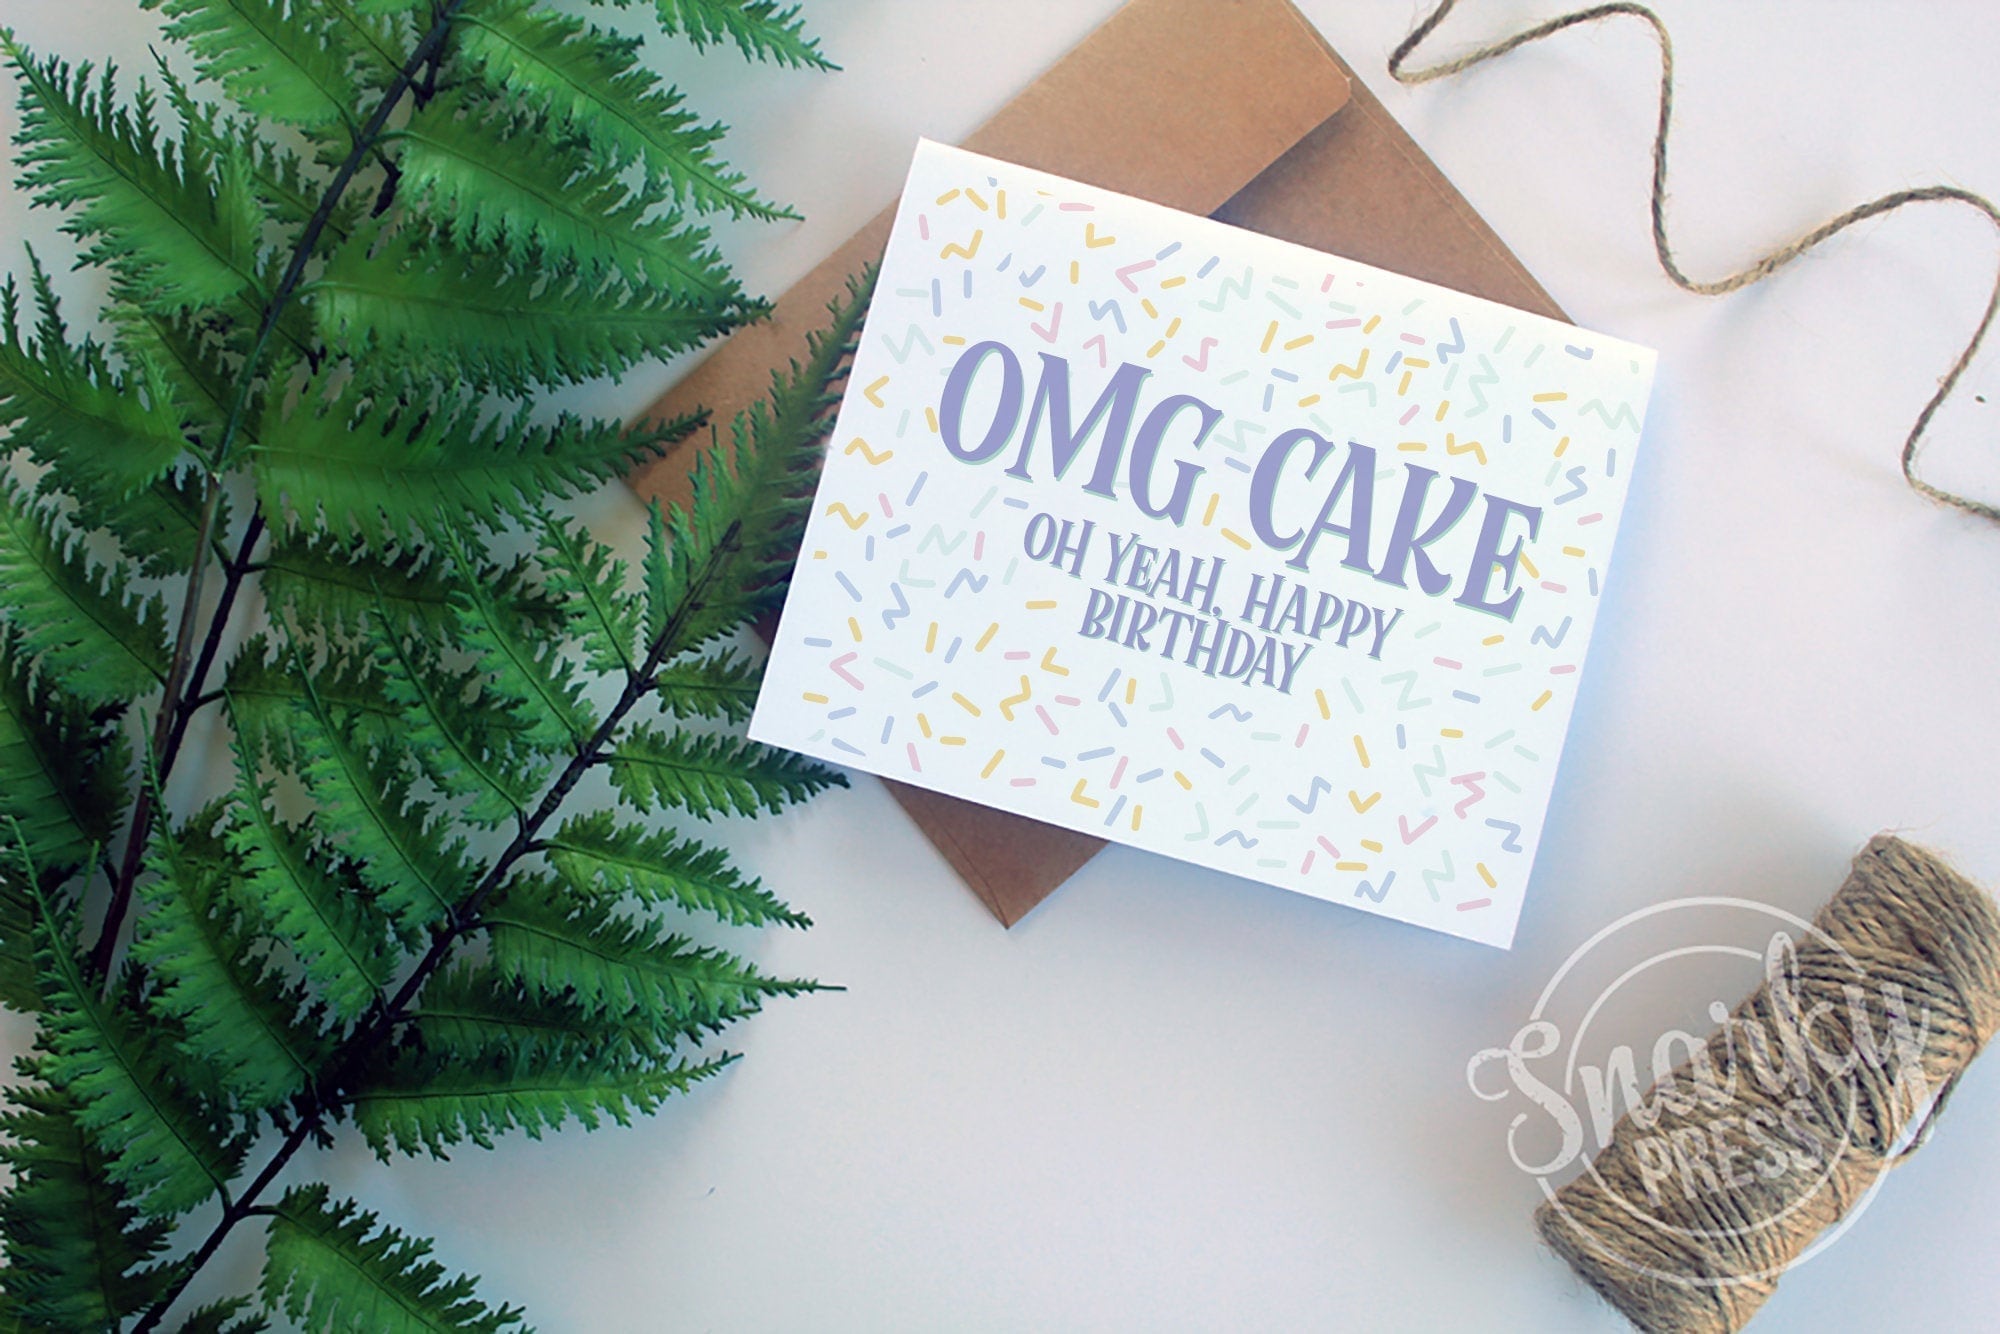 OMG CAKE, oh yeah happy birthday card